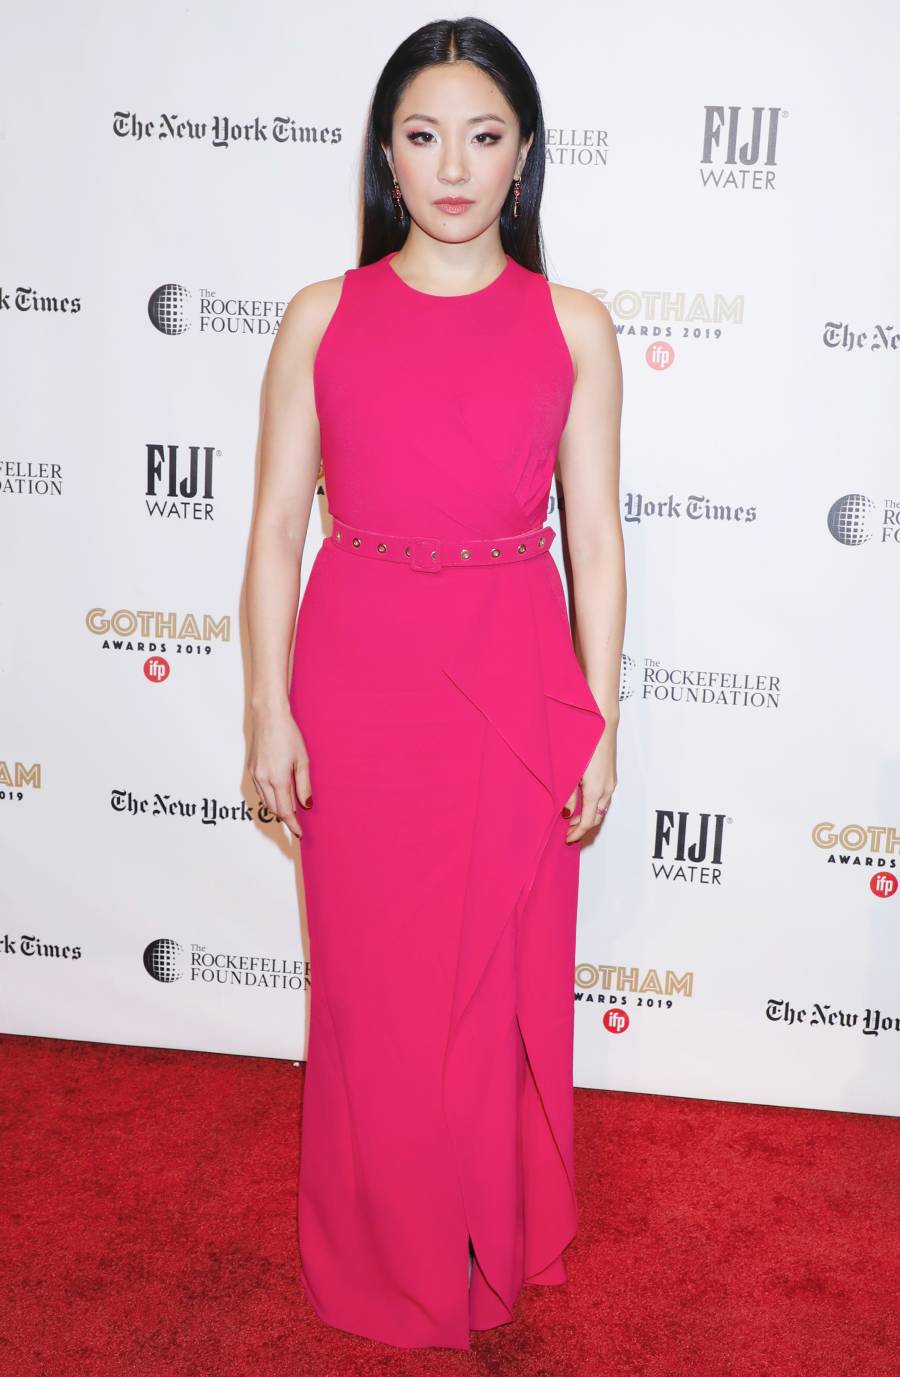 Gotham Film Awards Red Carpet - Constance Wu